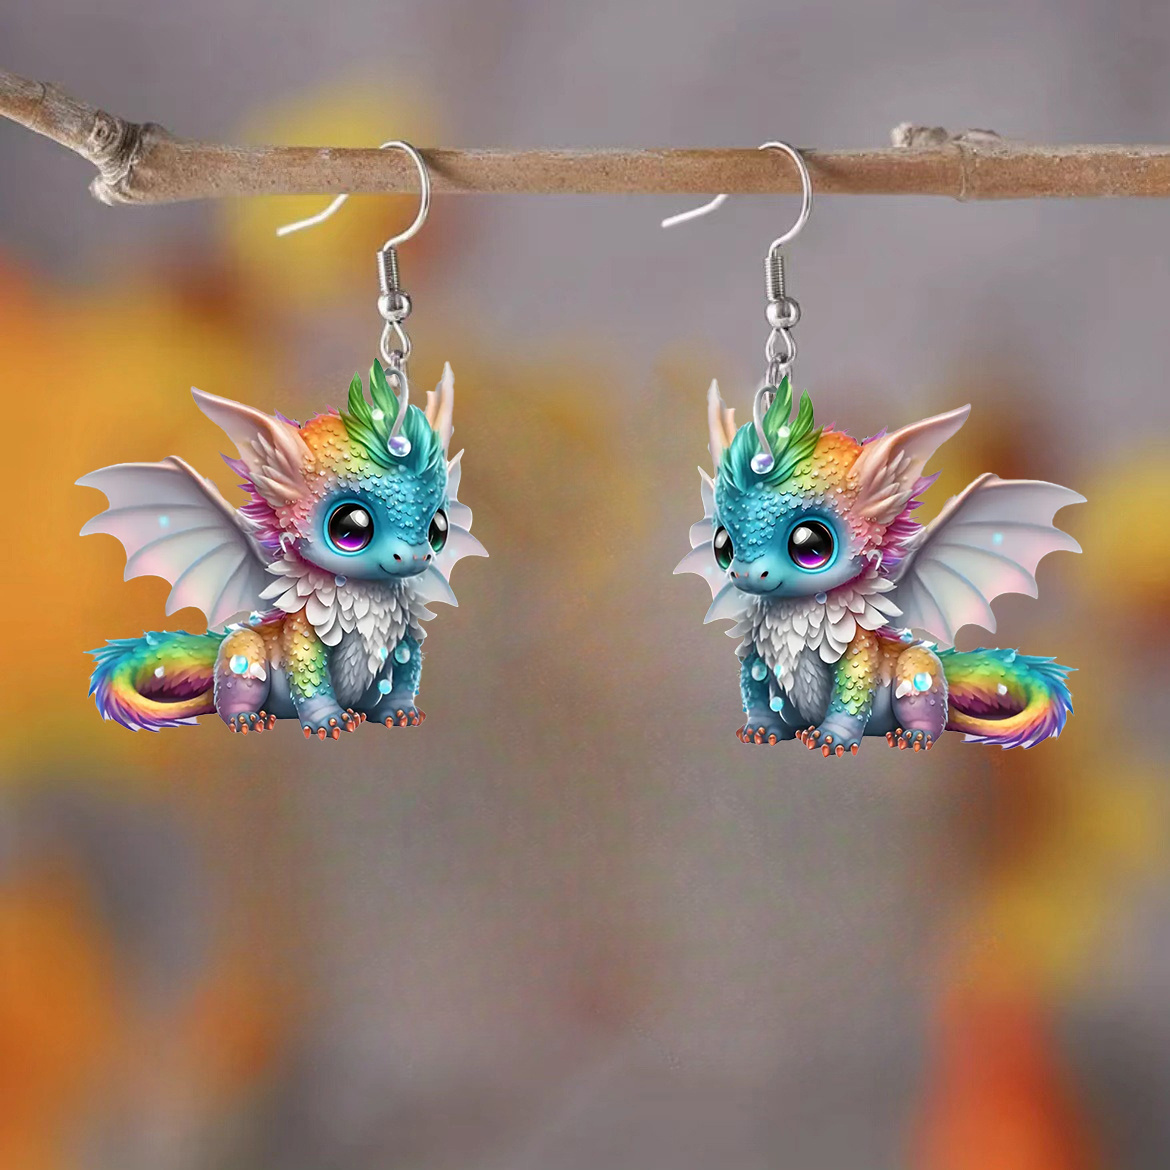 

Chic Dragon Earrings For Women - 2pc Set, Fun Acrylic Animal Accessories, Perfect Gift Idea